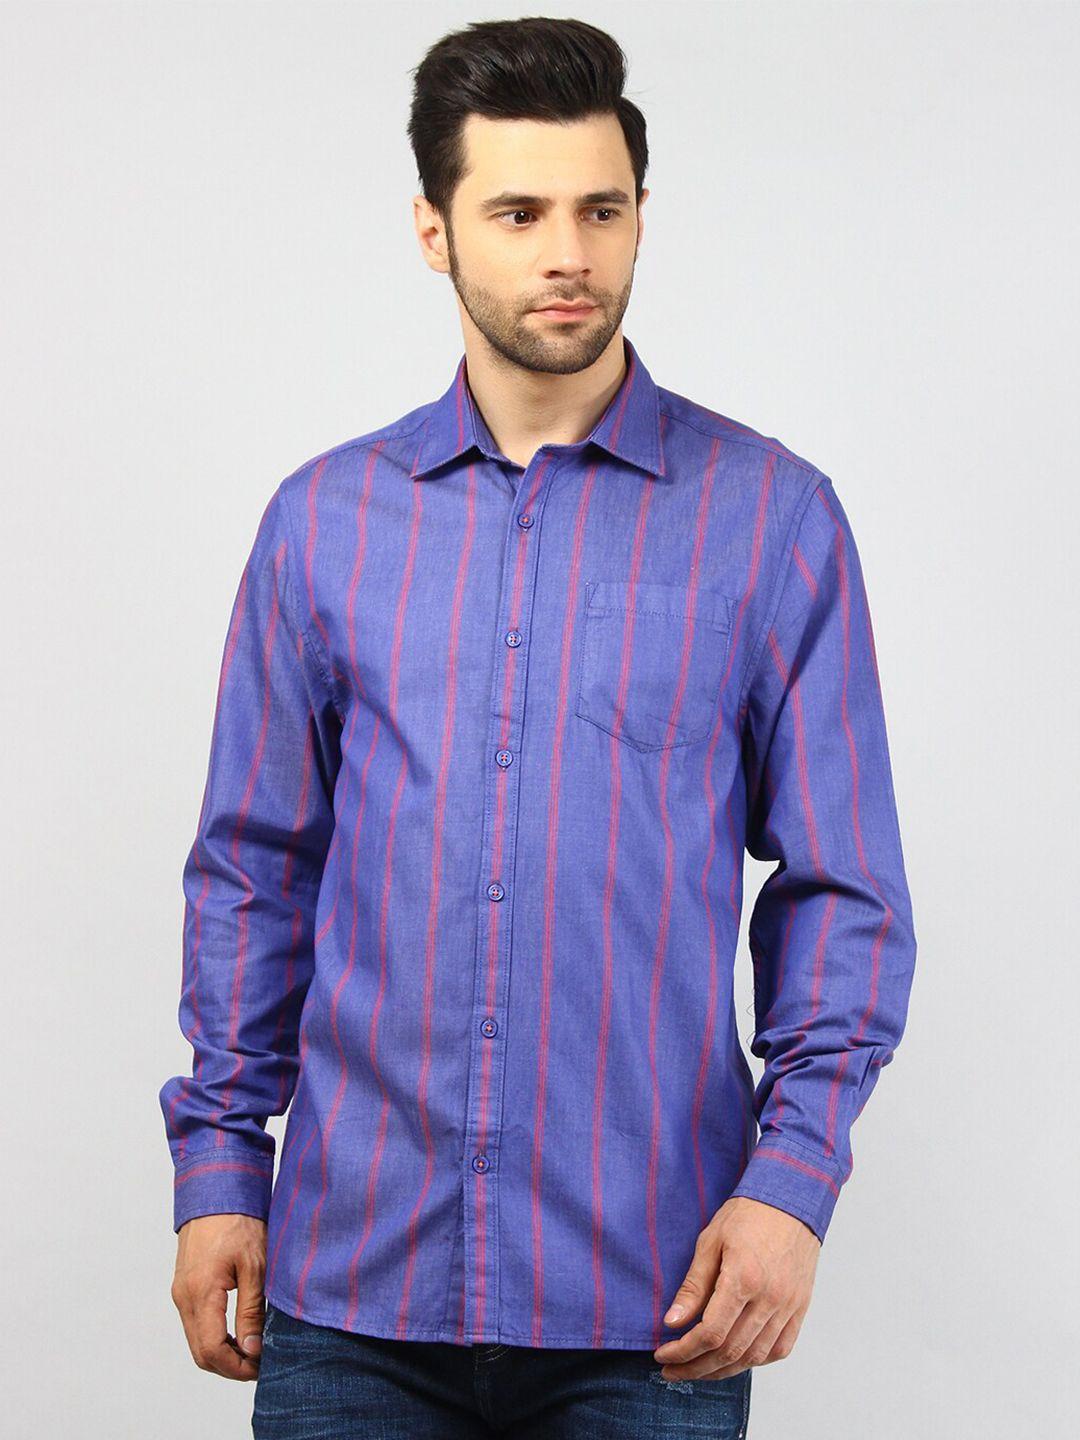 tim-paris-standard-opaque-striped-casual-shirt